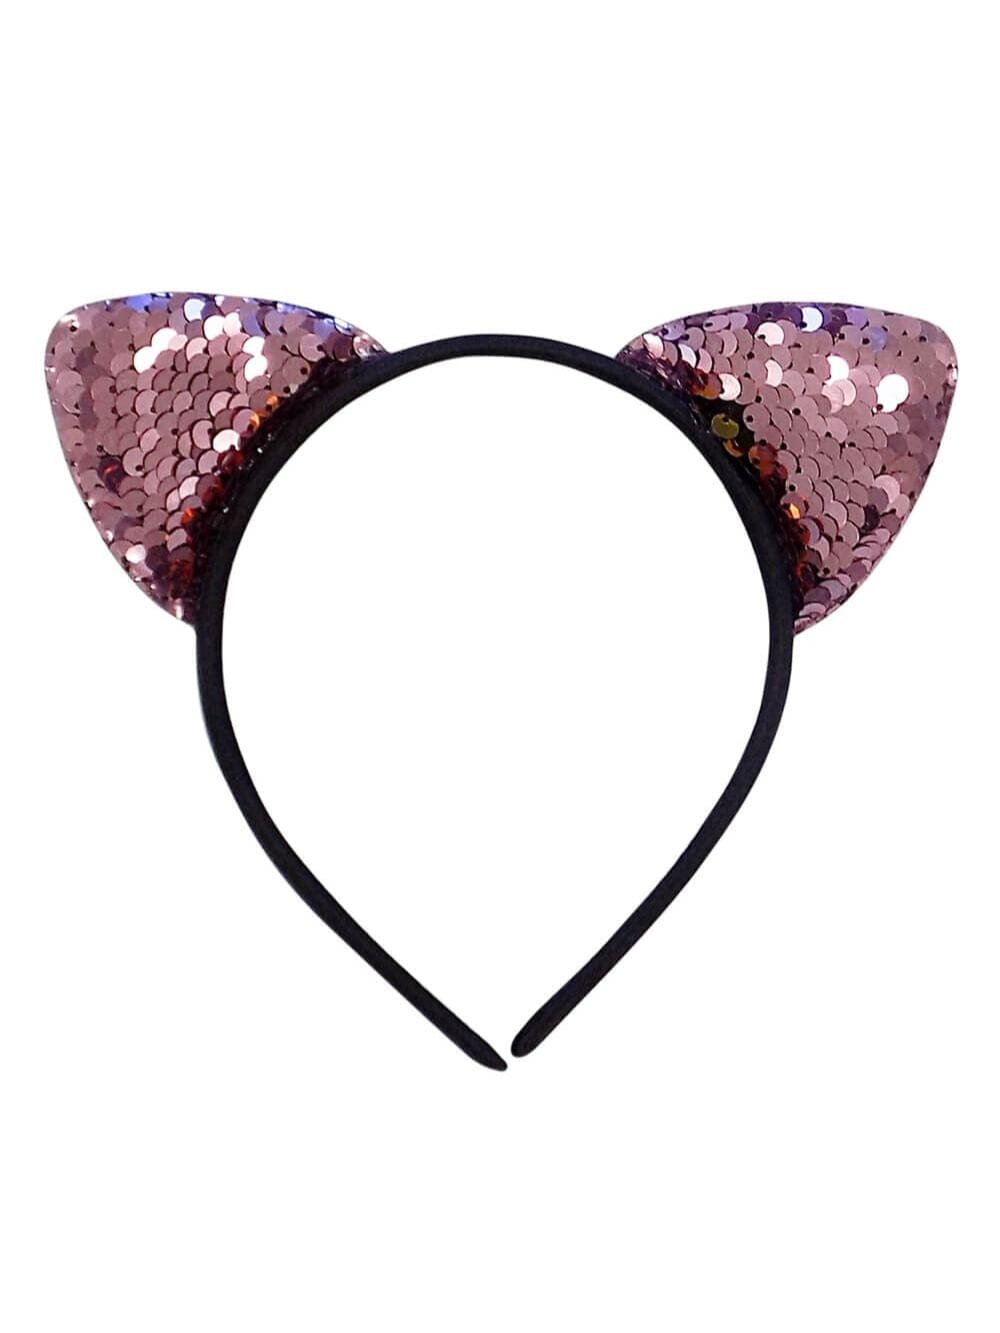 Flip Sequin Pink Cat Girls Headband Ears, Kid or Adult Size Costume Accessories - Sydney So Sweet